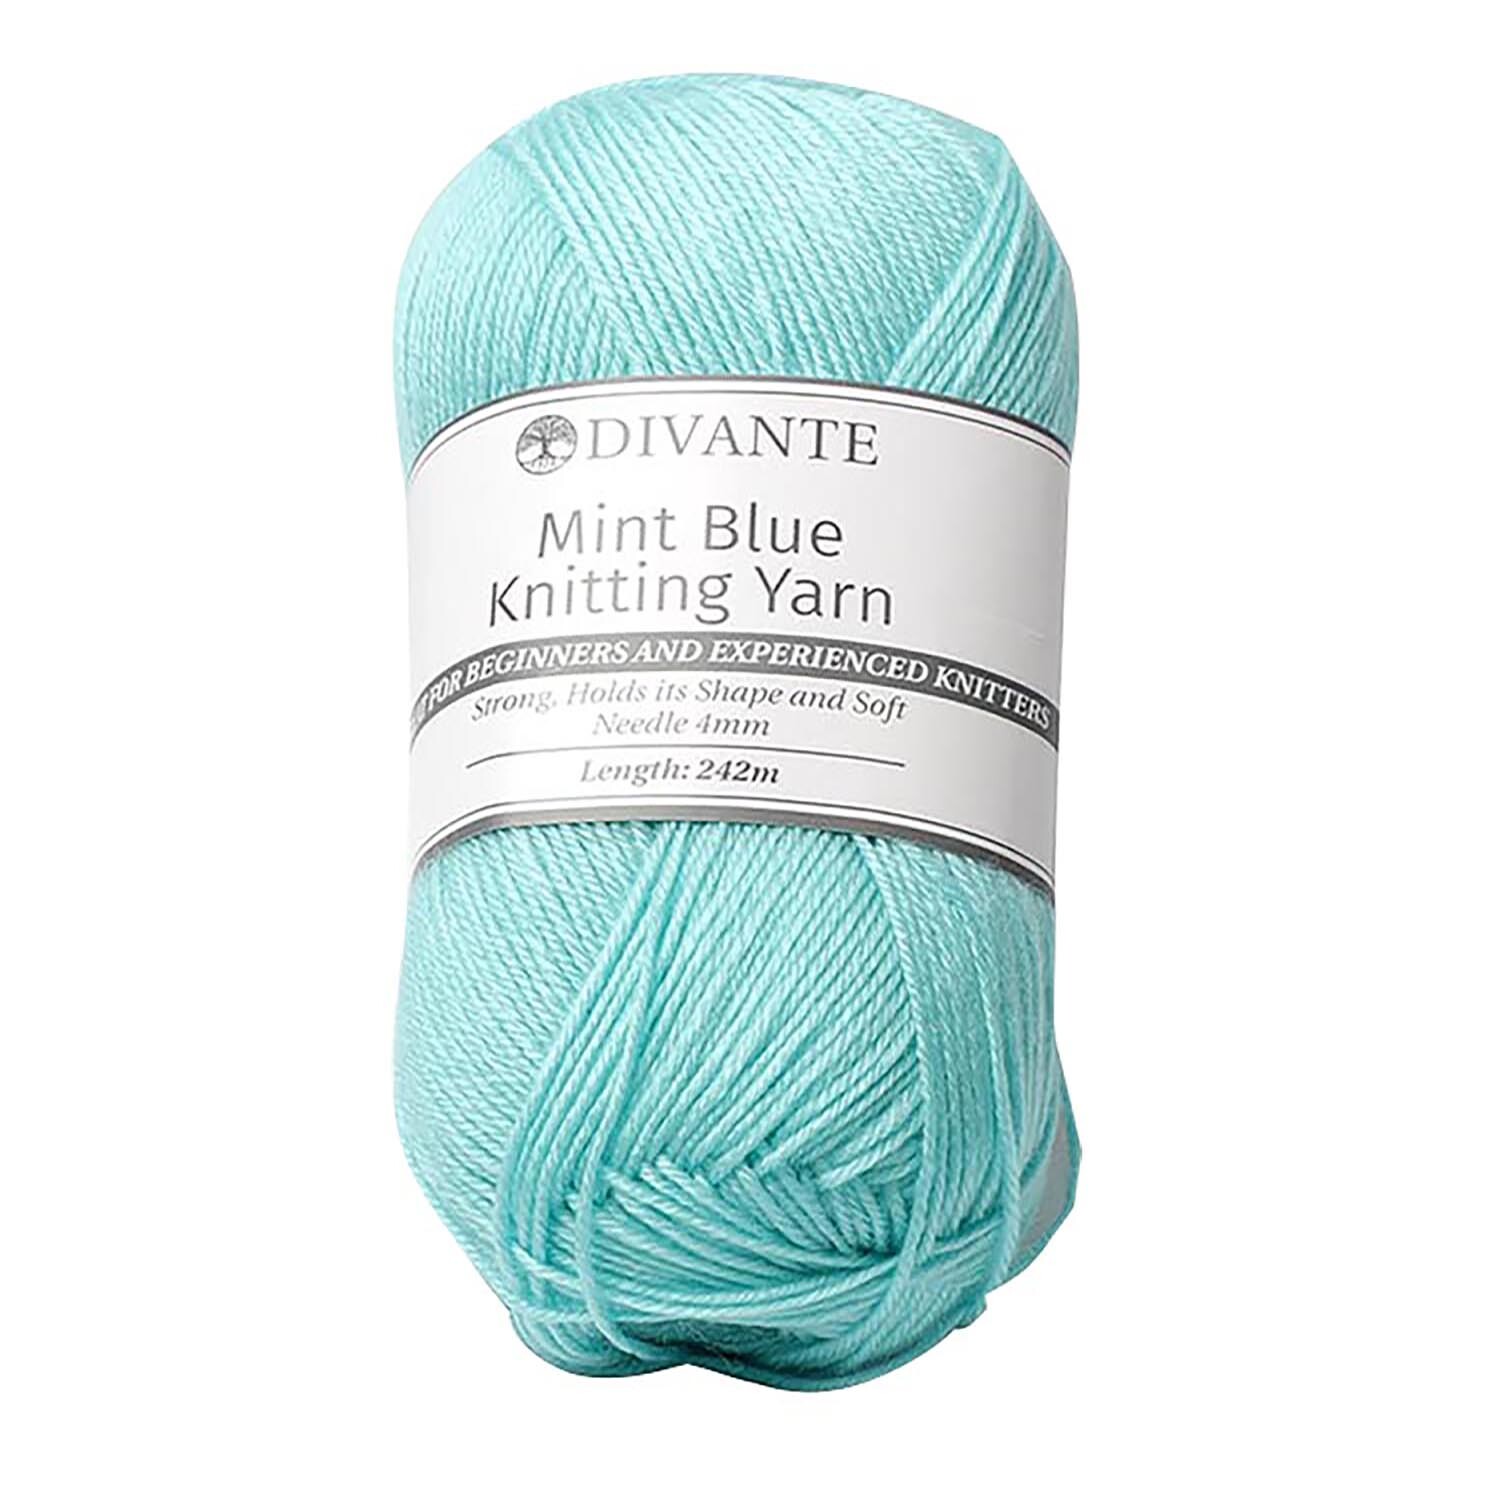 Divante Basic Knitting Yarn - Mint Blue Image